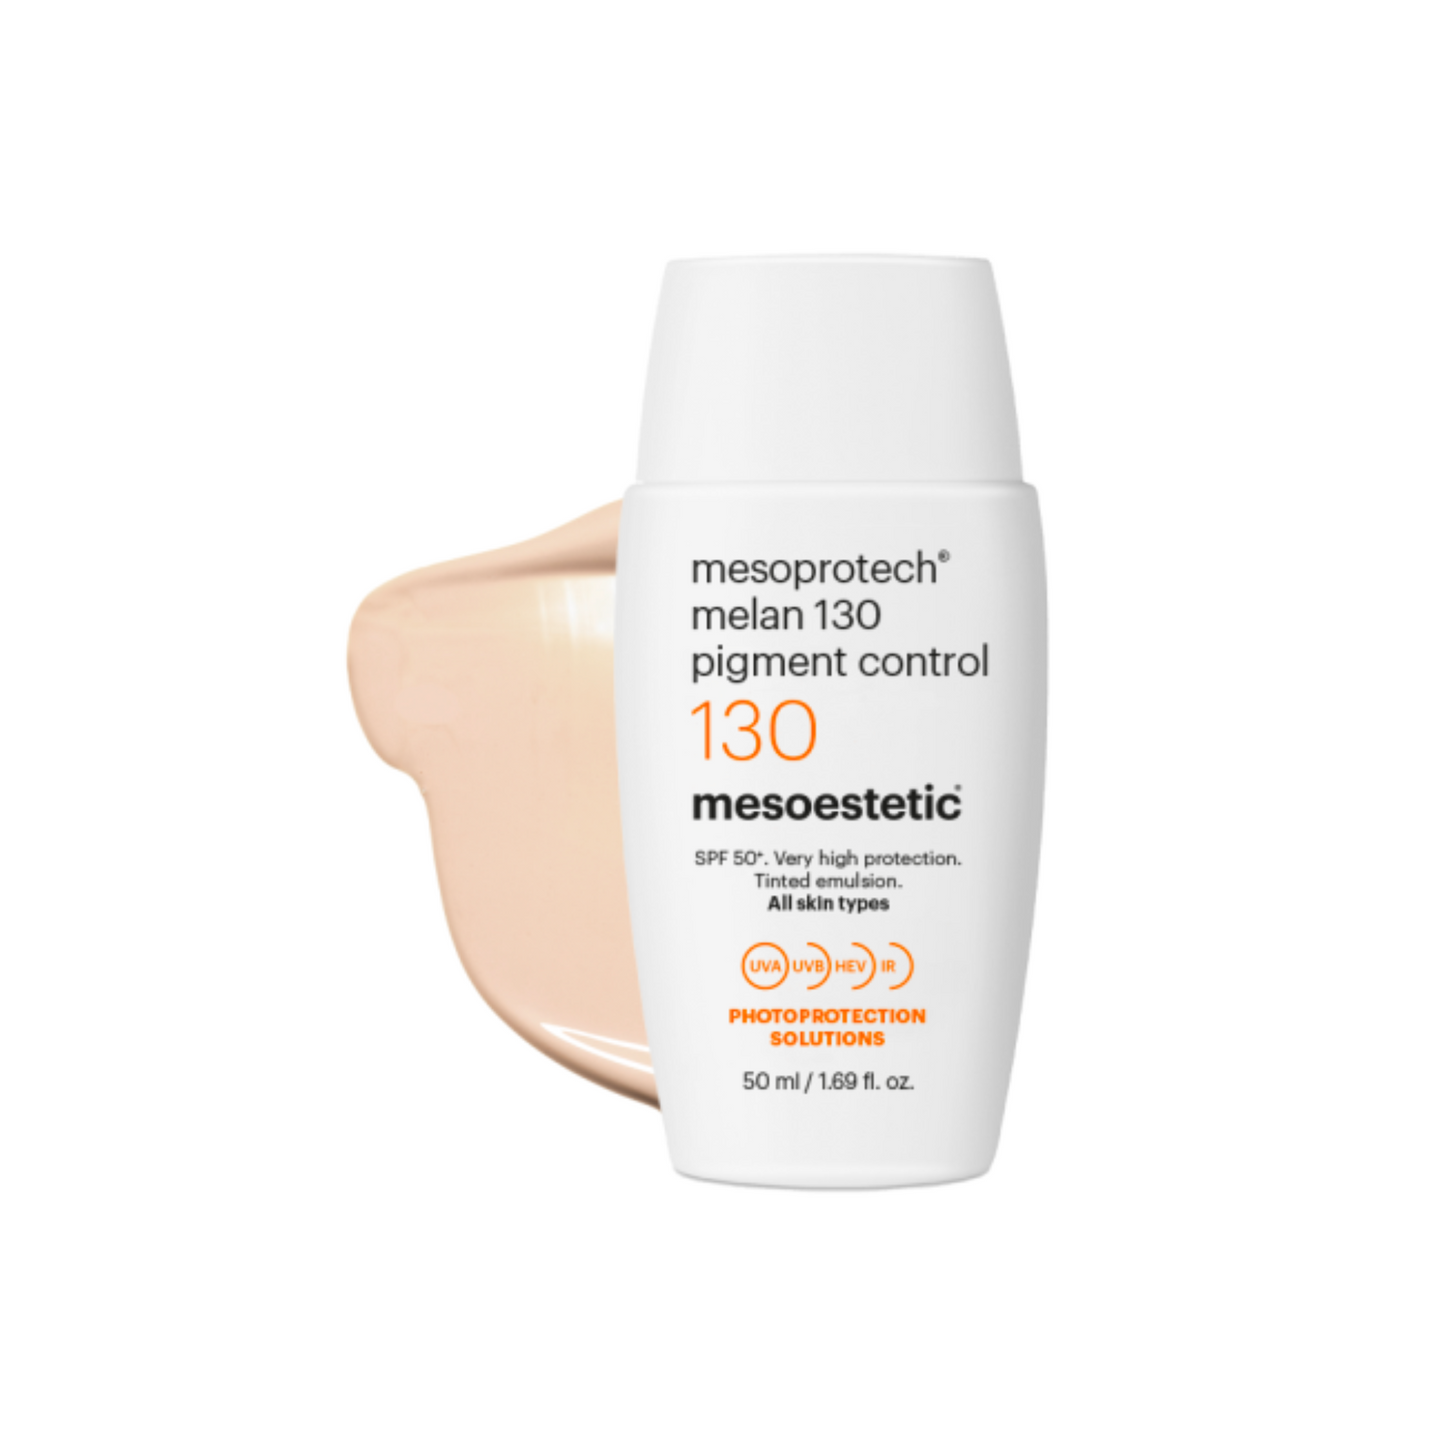 Mesoprotech® Melan 130 Pigment Control - Tinted sunscreen high sun protection - 50ml